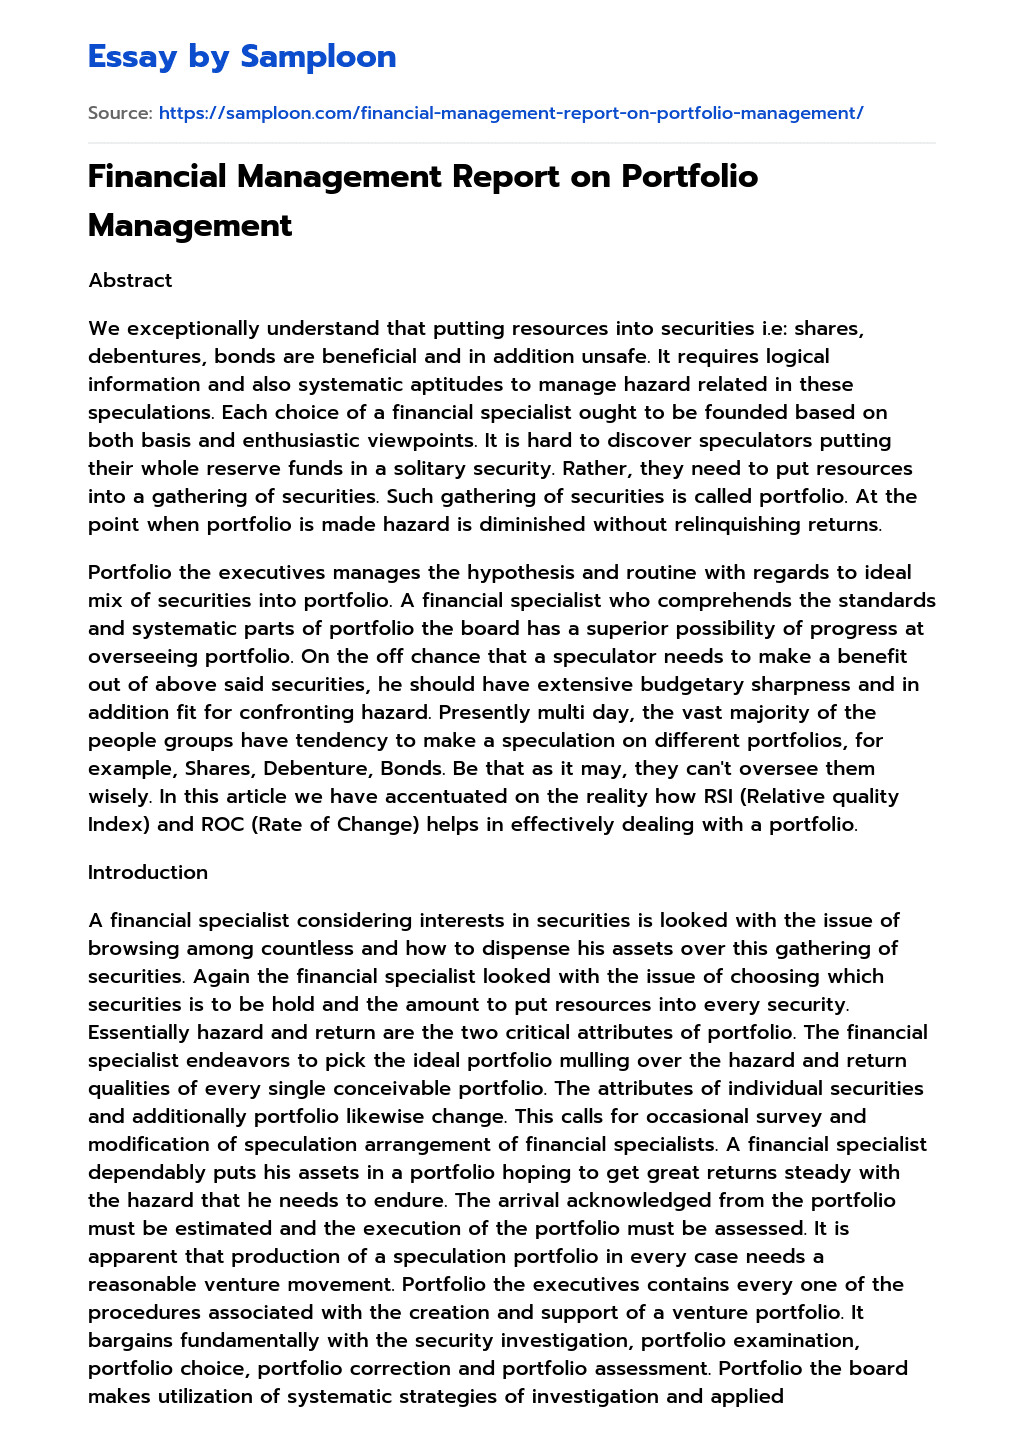 Financial Management Report on Portfolio Management essay